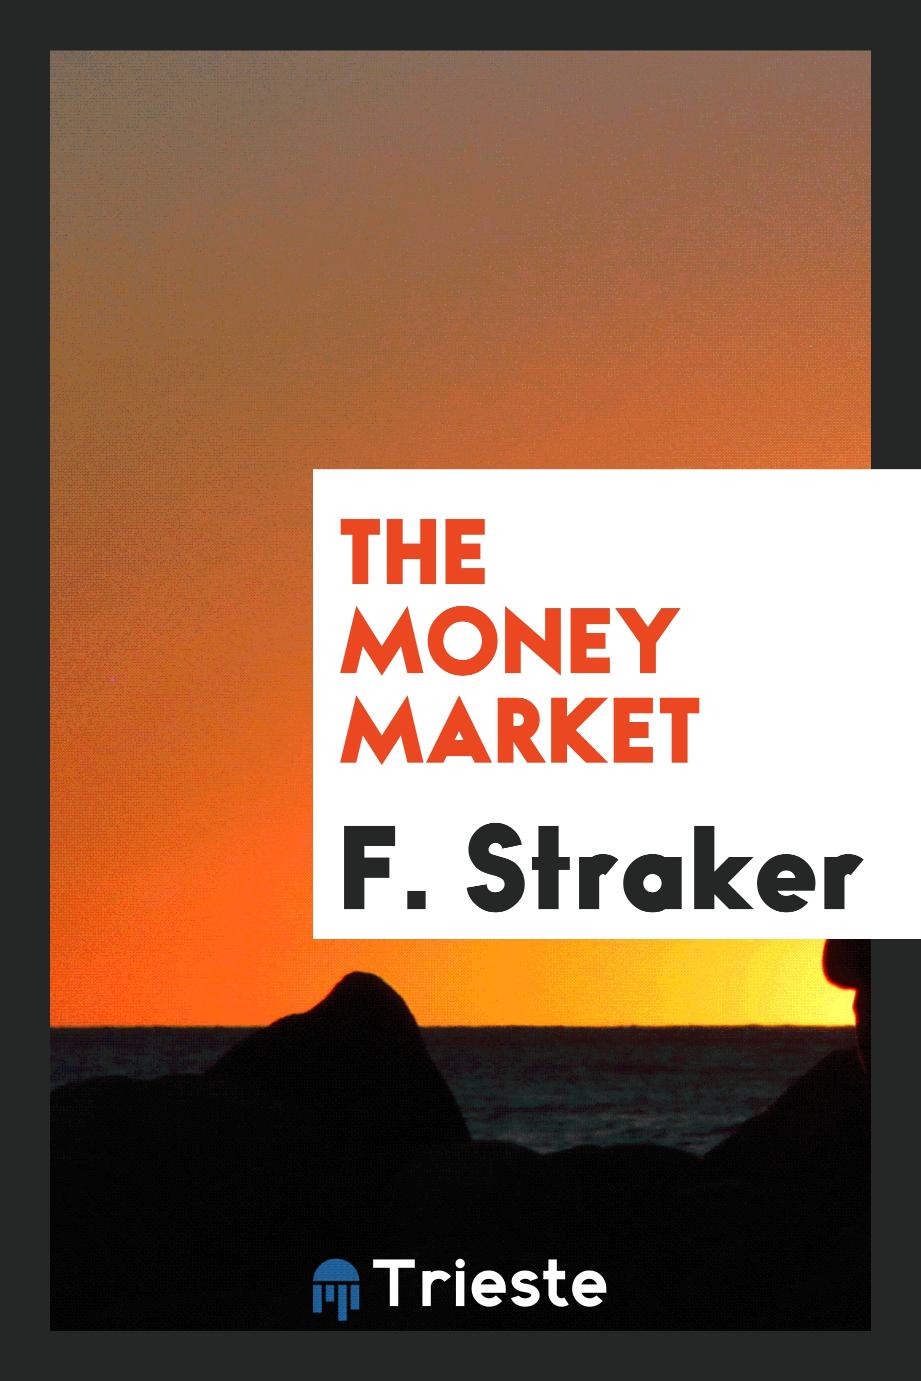 The Money Market